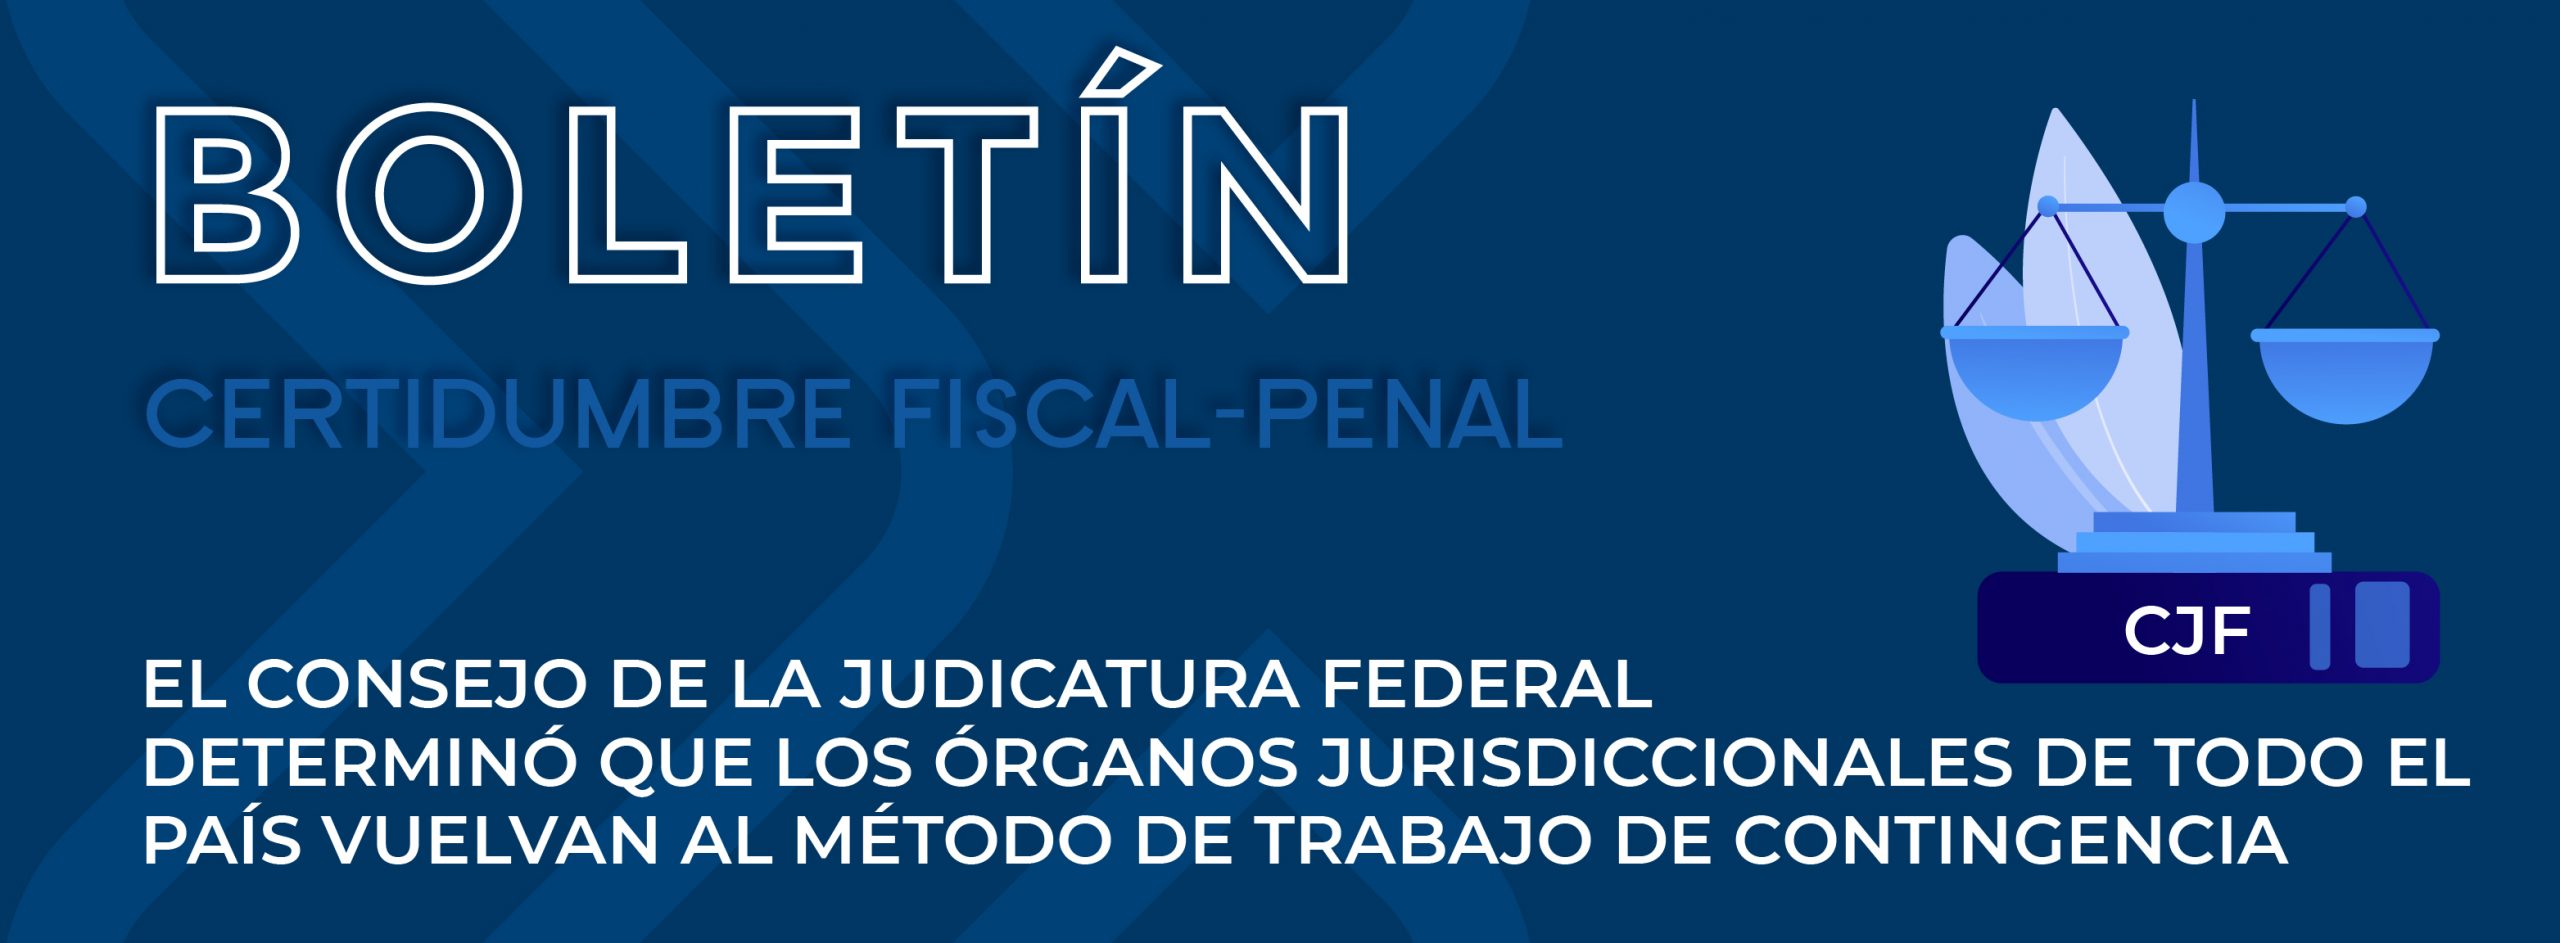 Judicatura Federal covid 19 BHR Mexico